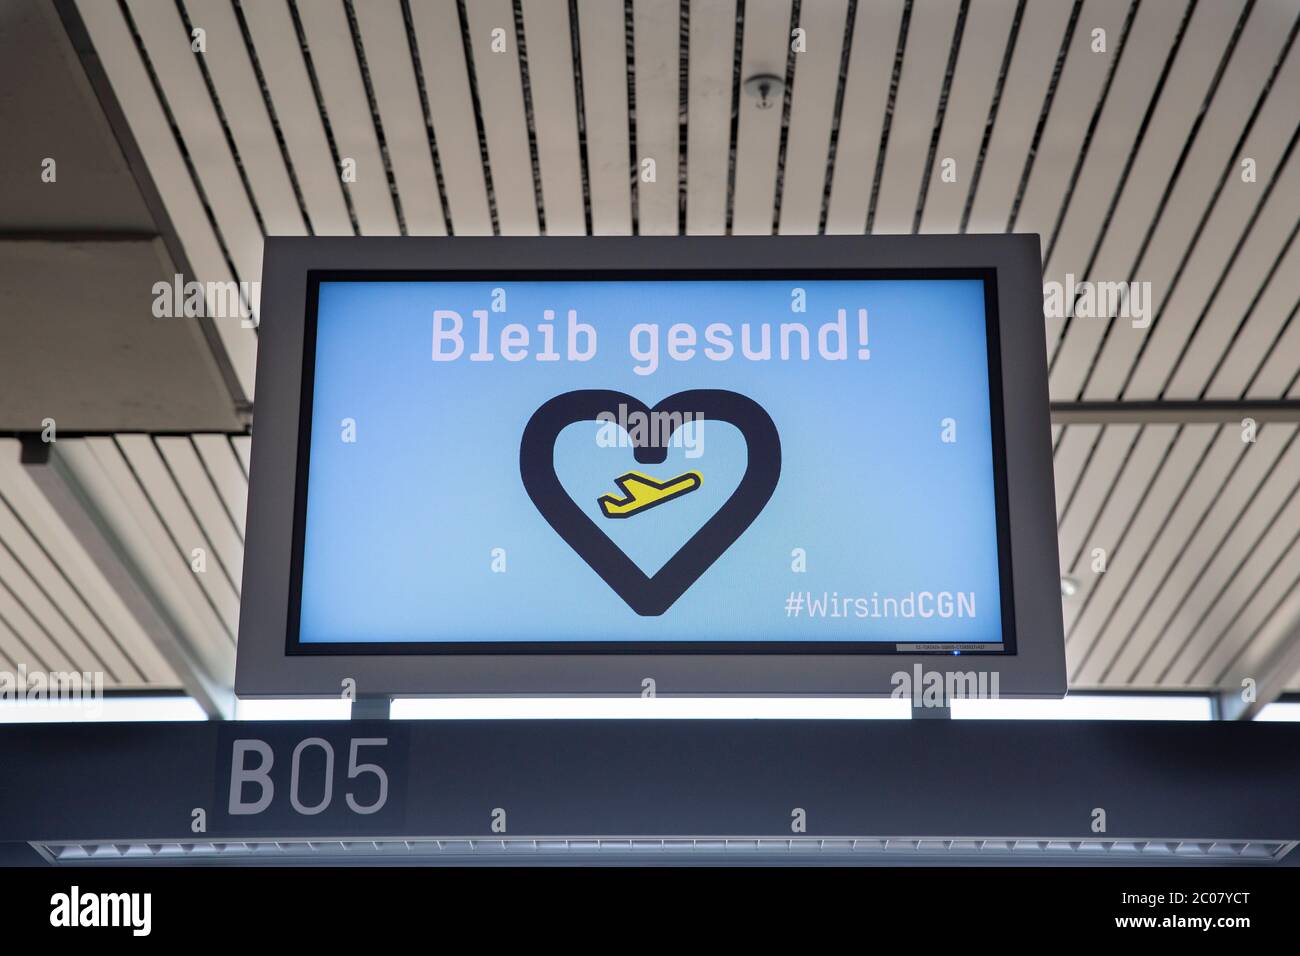 Nahezu vollständiges Erliegen des Personenflugverkehrs im Zusammenhang mit der Corona-Kise am Flughafen Köln/Bonn. Köln; 07.04.2020 Foto de stock